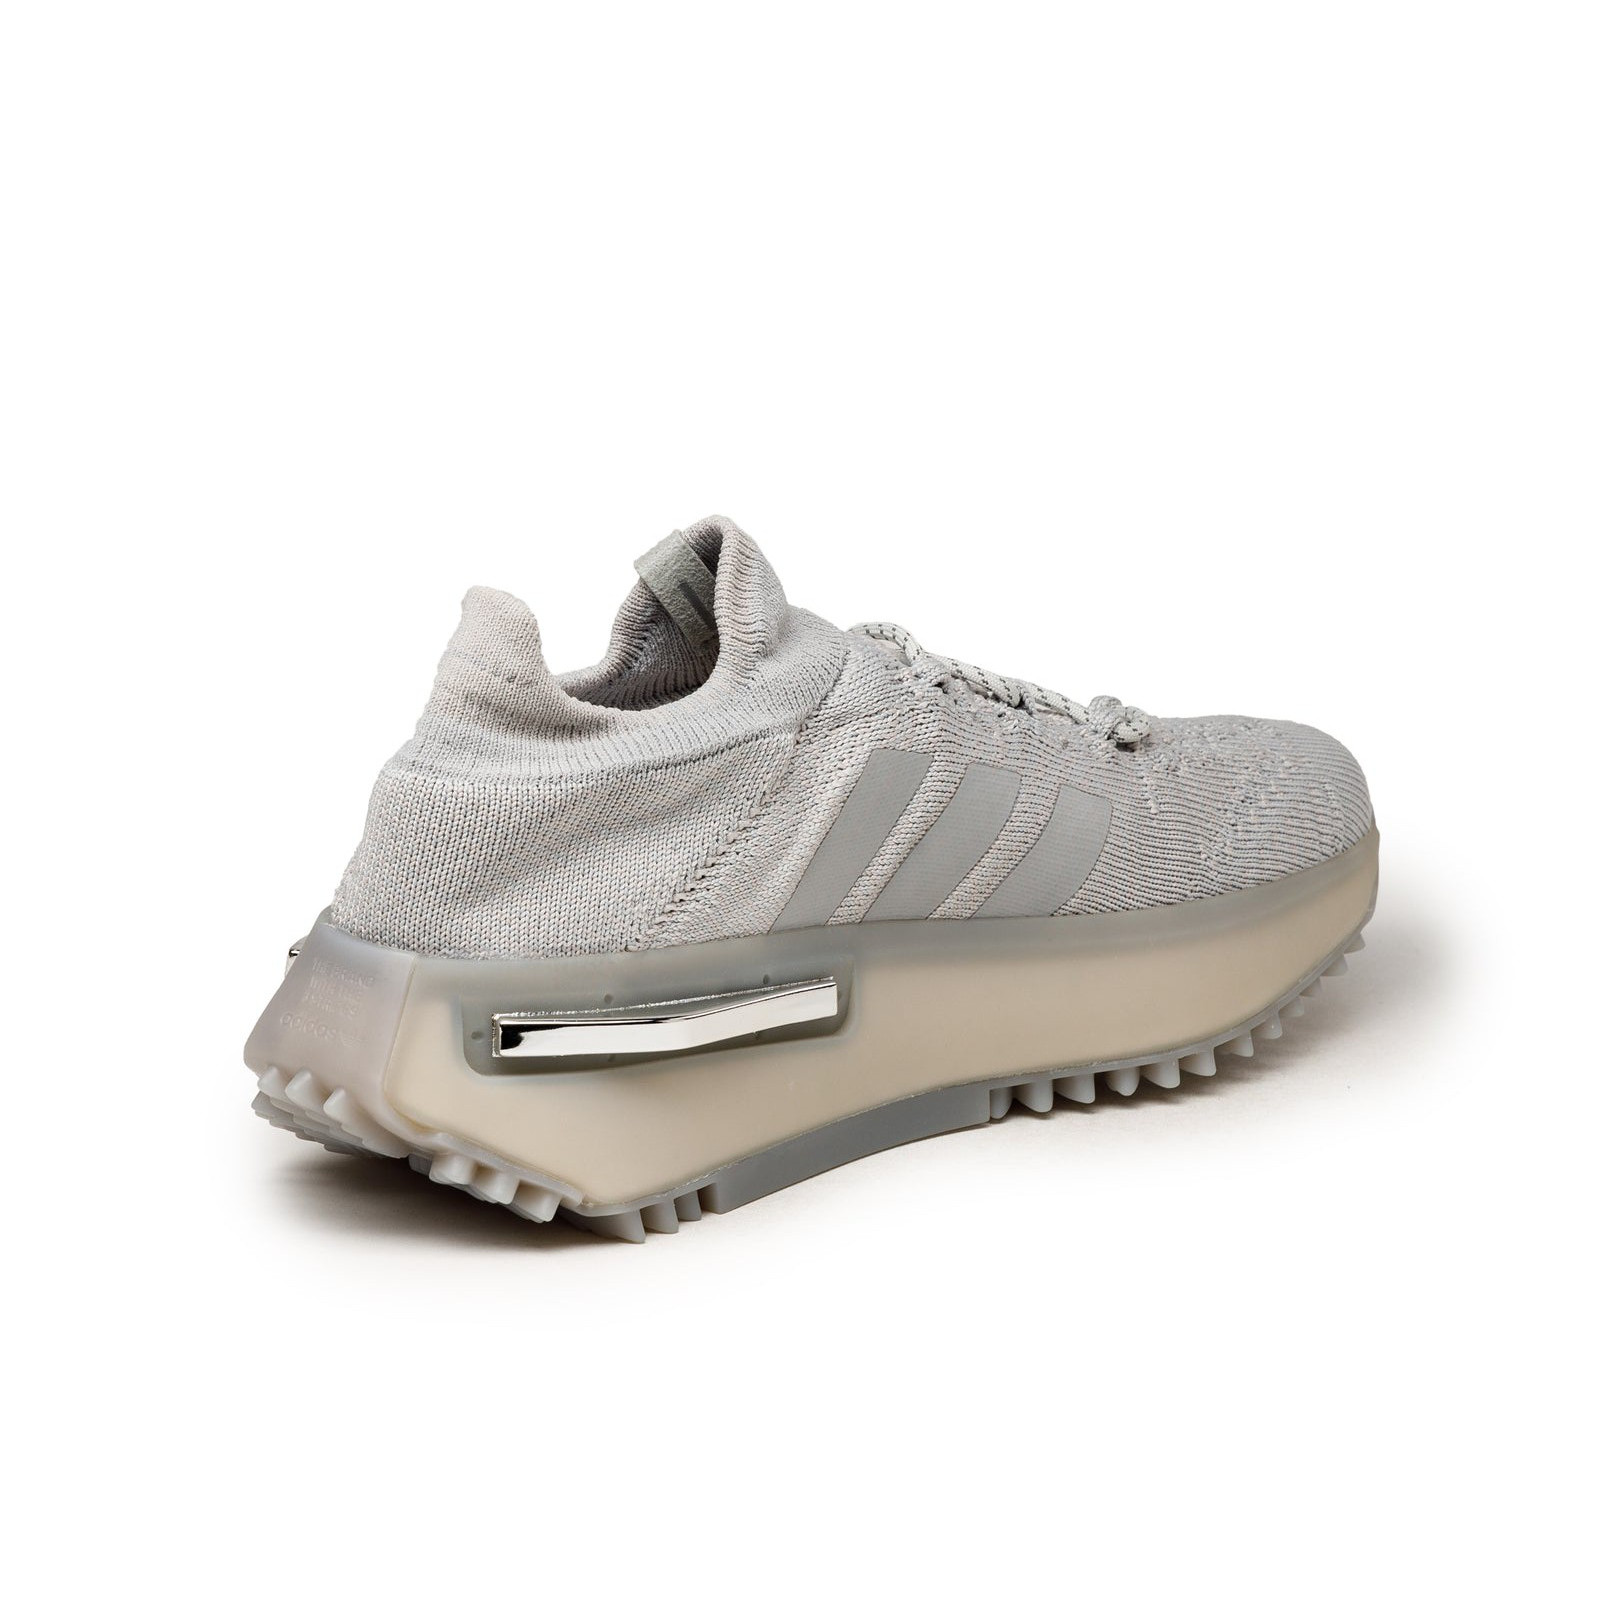 Adidas NMD_S1
Grey / Silver Metallic